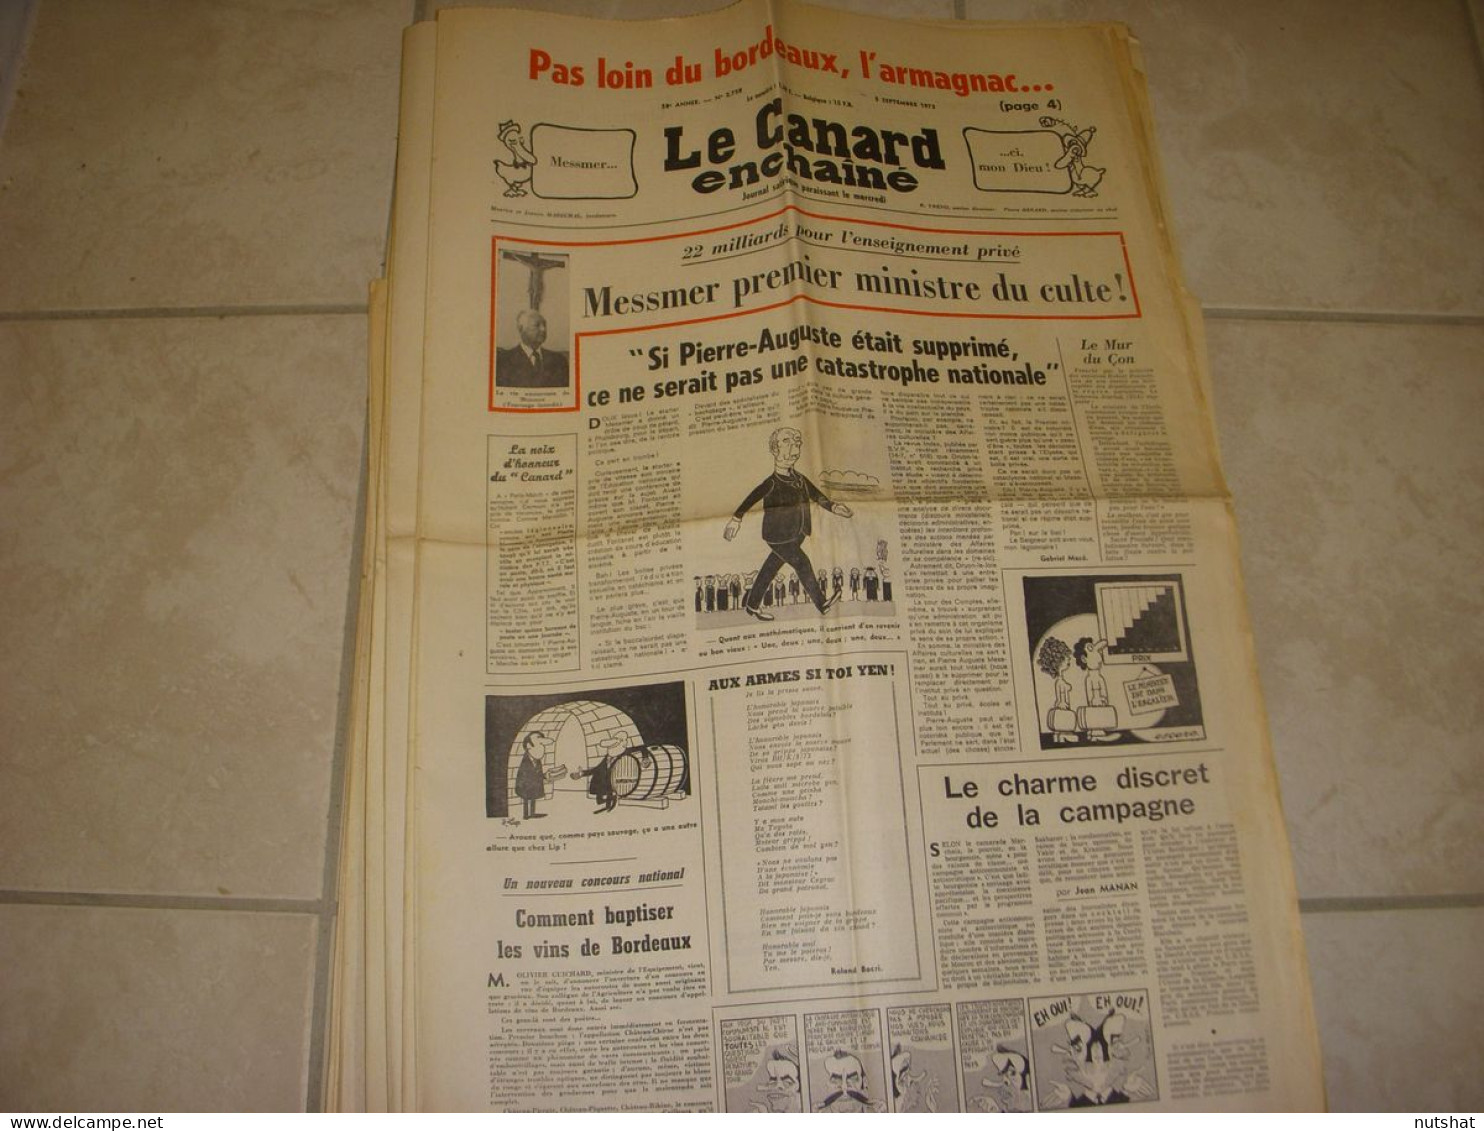 CANARD ENCHAINE 2758 05.09.1973 Le MLF Michel POLAC Benigno CACERES Guy LUX - Politik